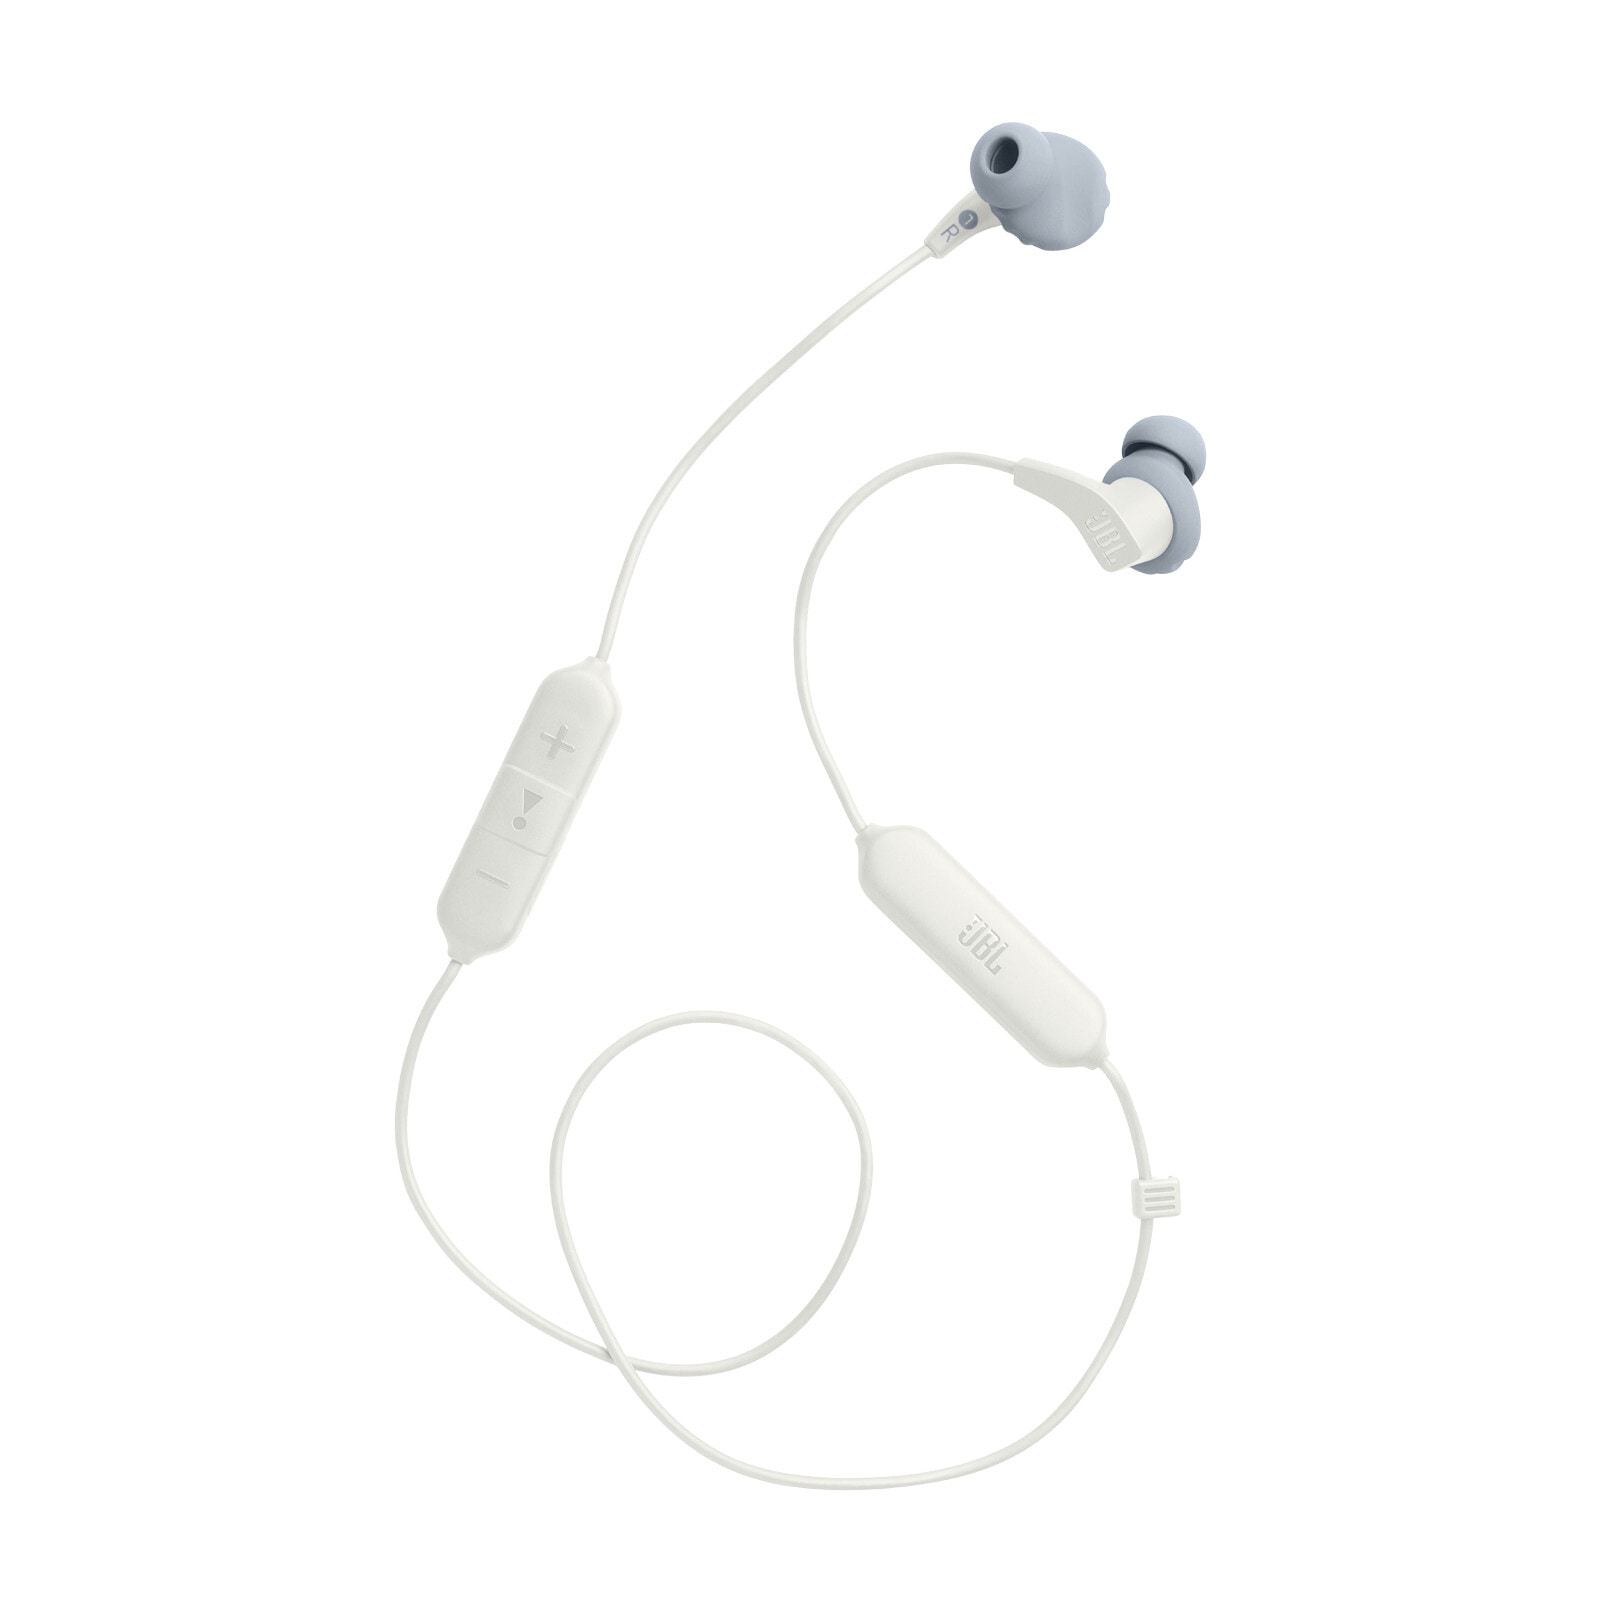 JBL wireless In-Ear-Kopfhörer 2« jetzt BT kaufen »Endurance bei Run OTTO